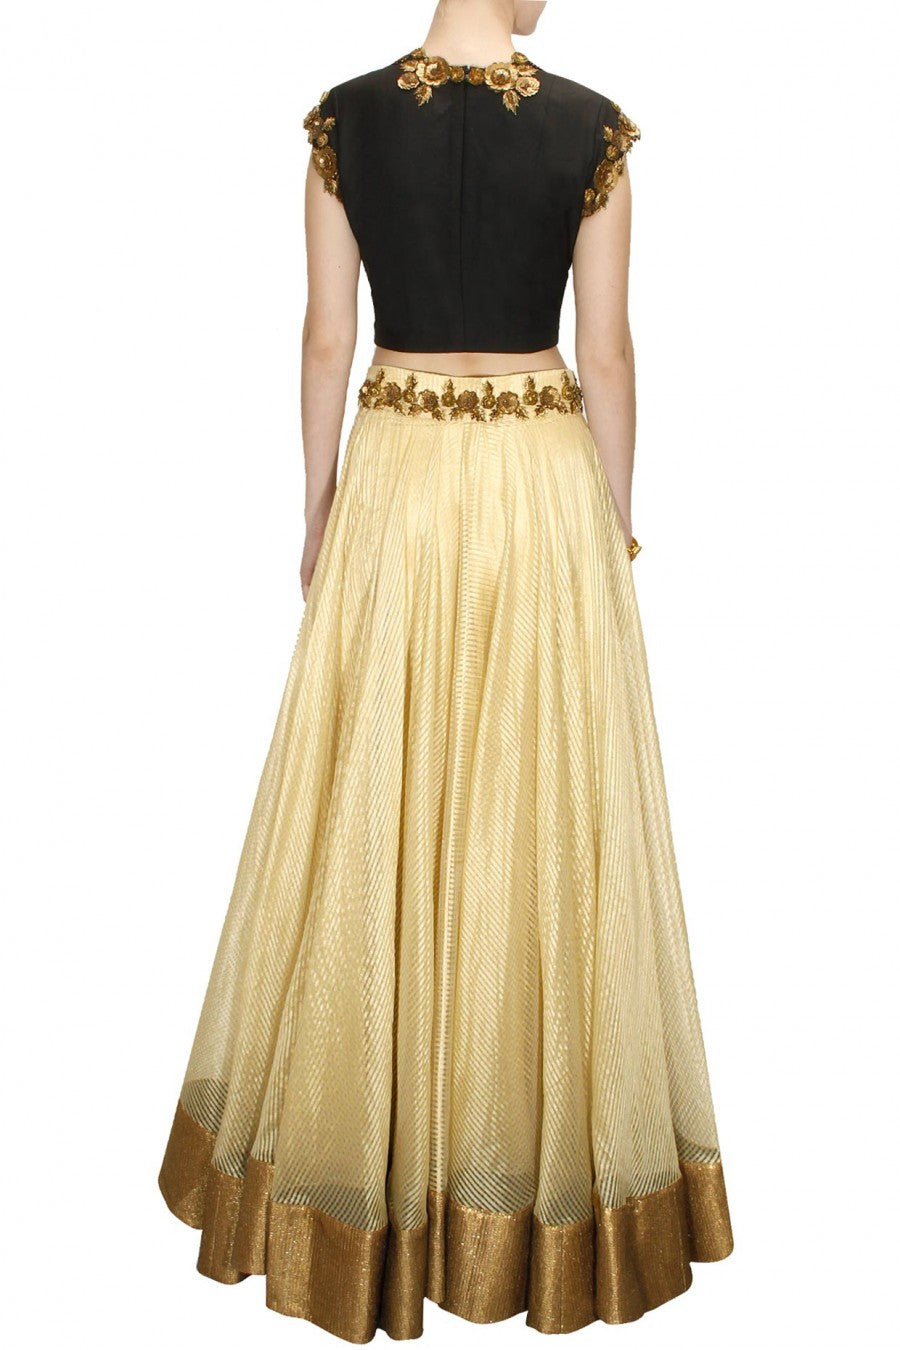 Gold Color matka silk lehenga choli – Panache Haute Couture